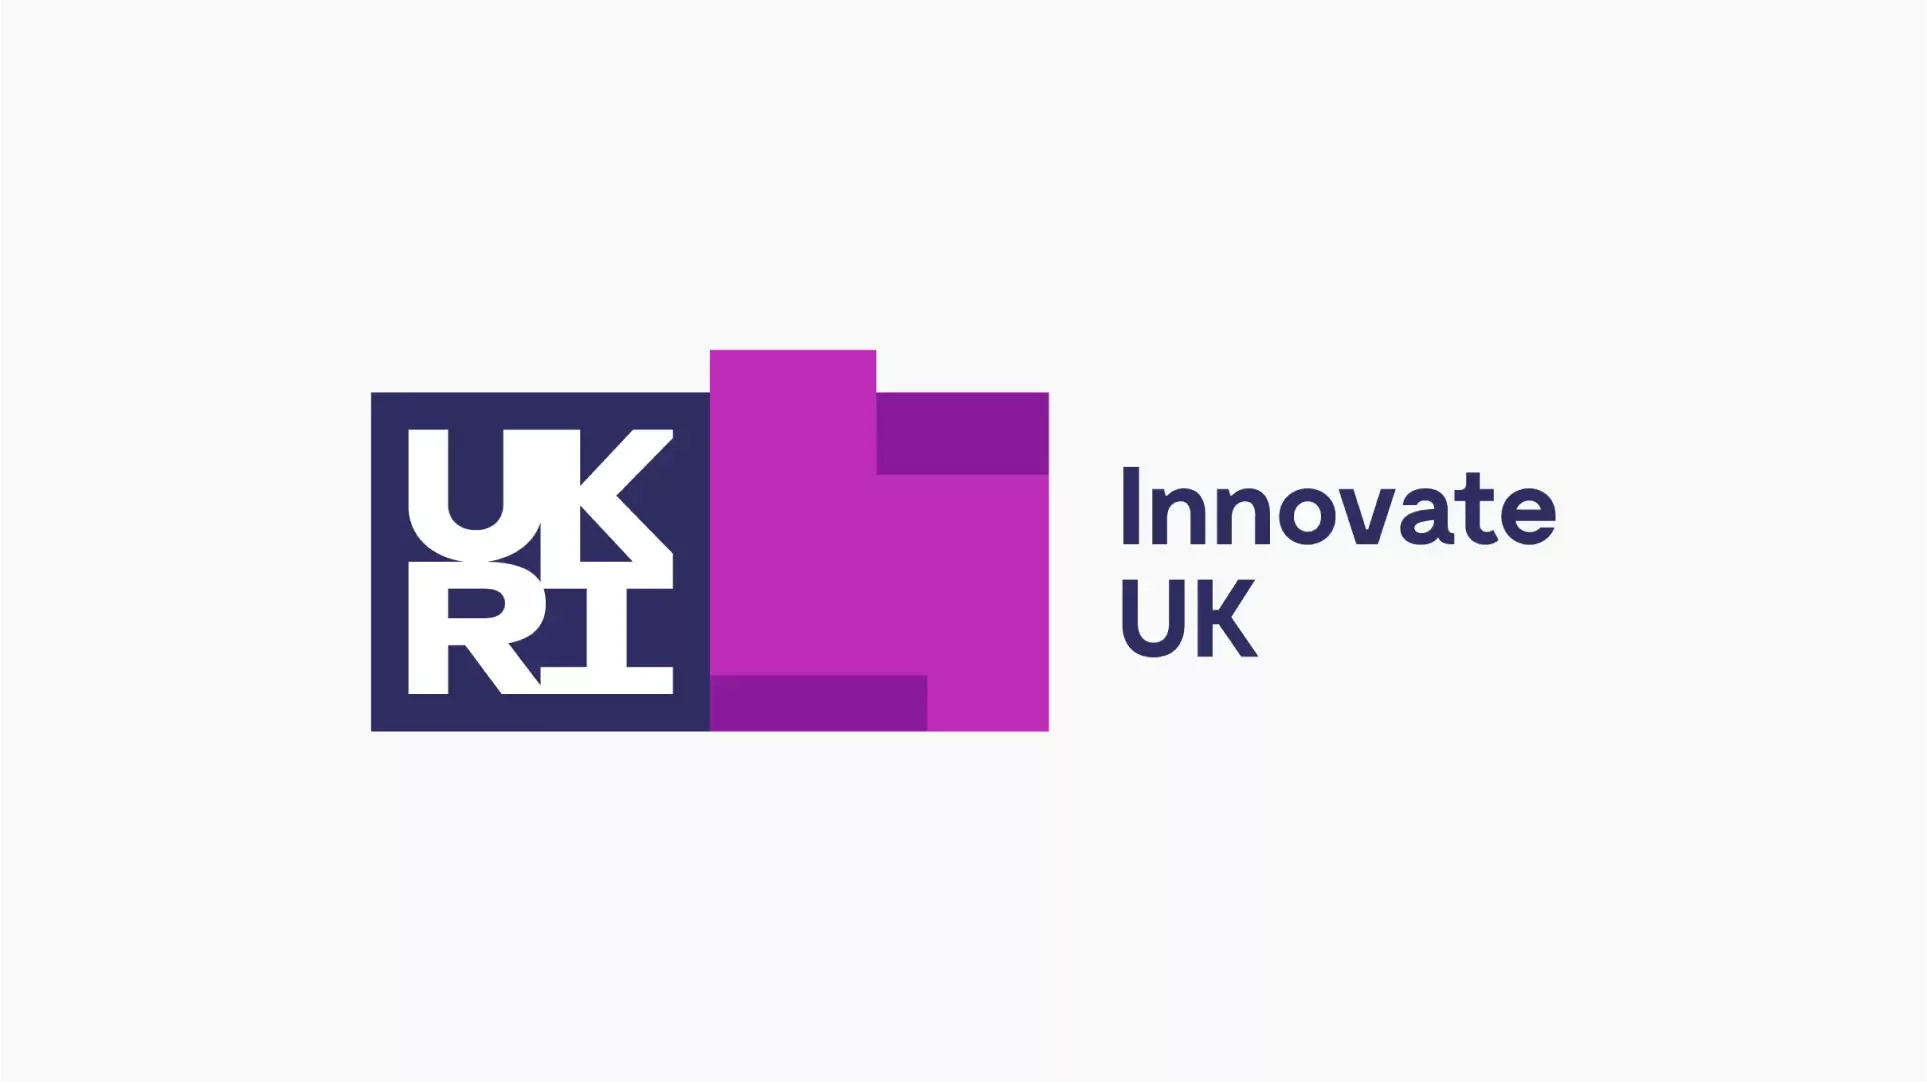 Fund Innovate UK